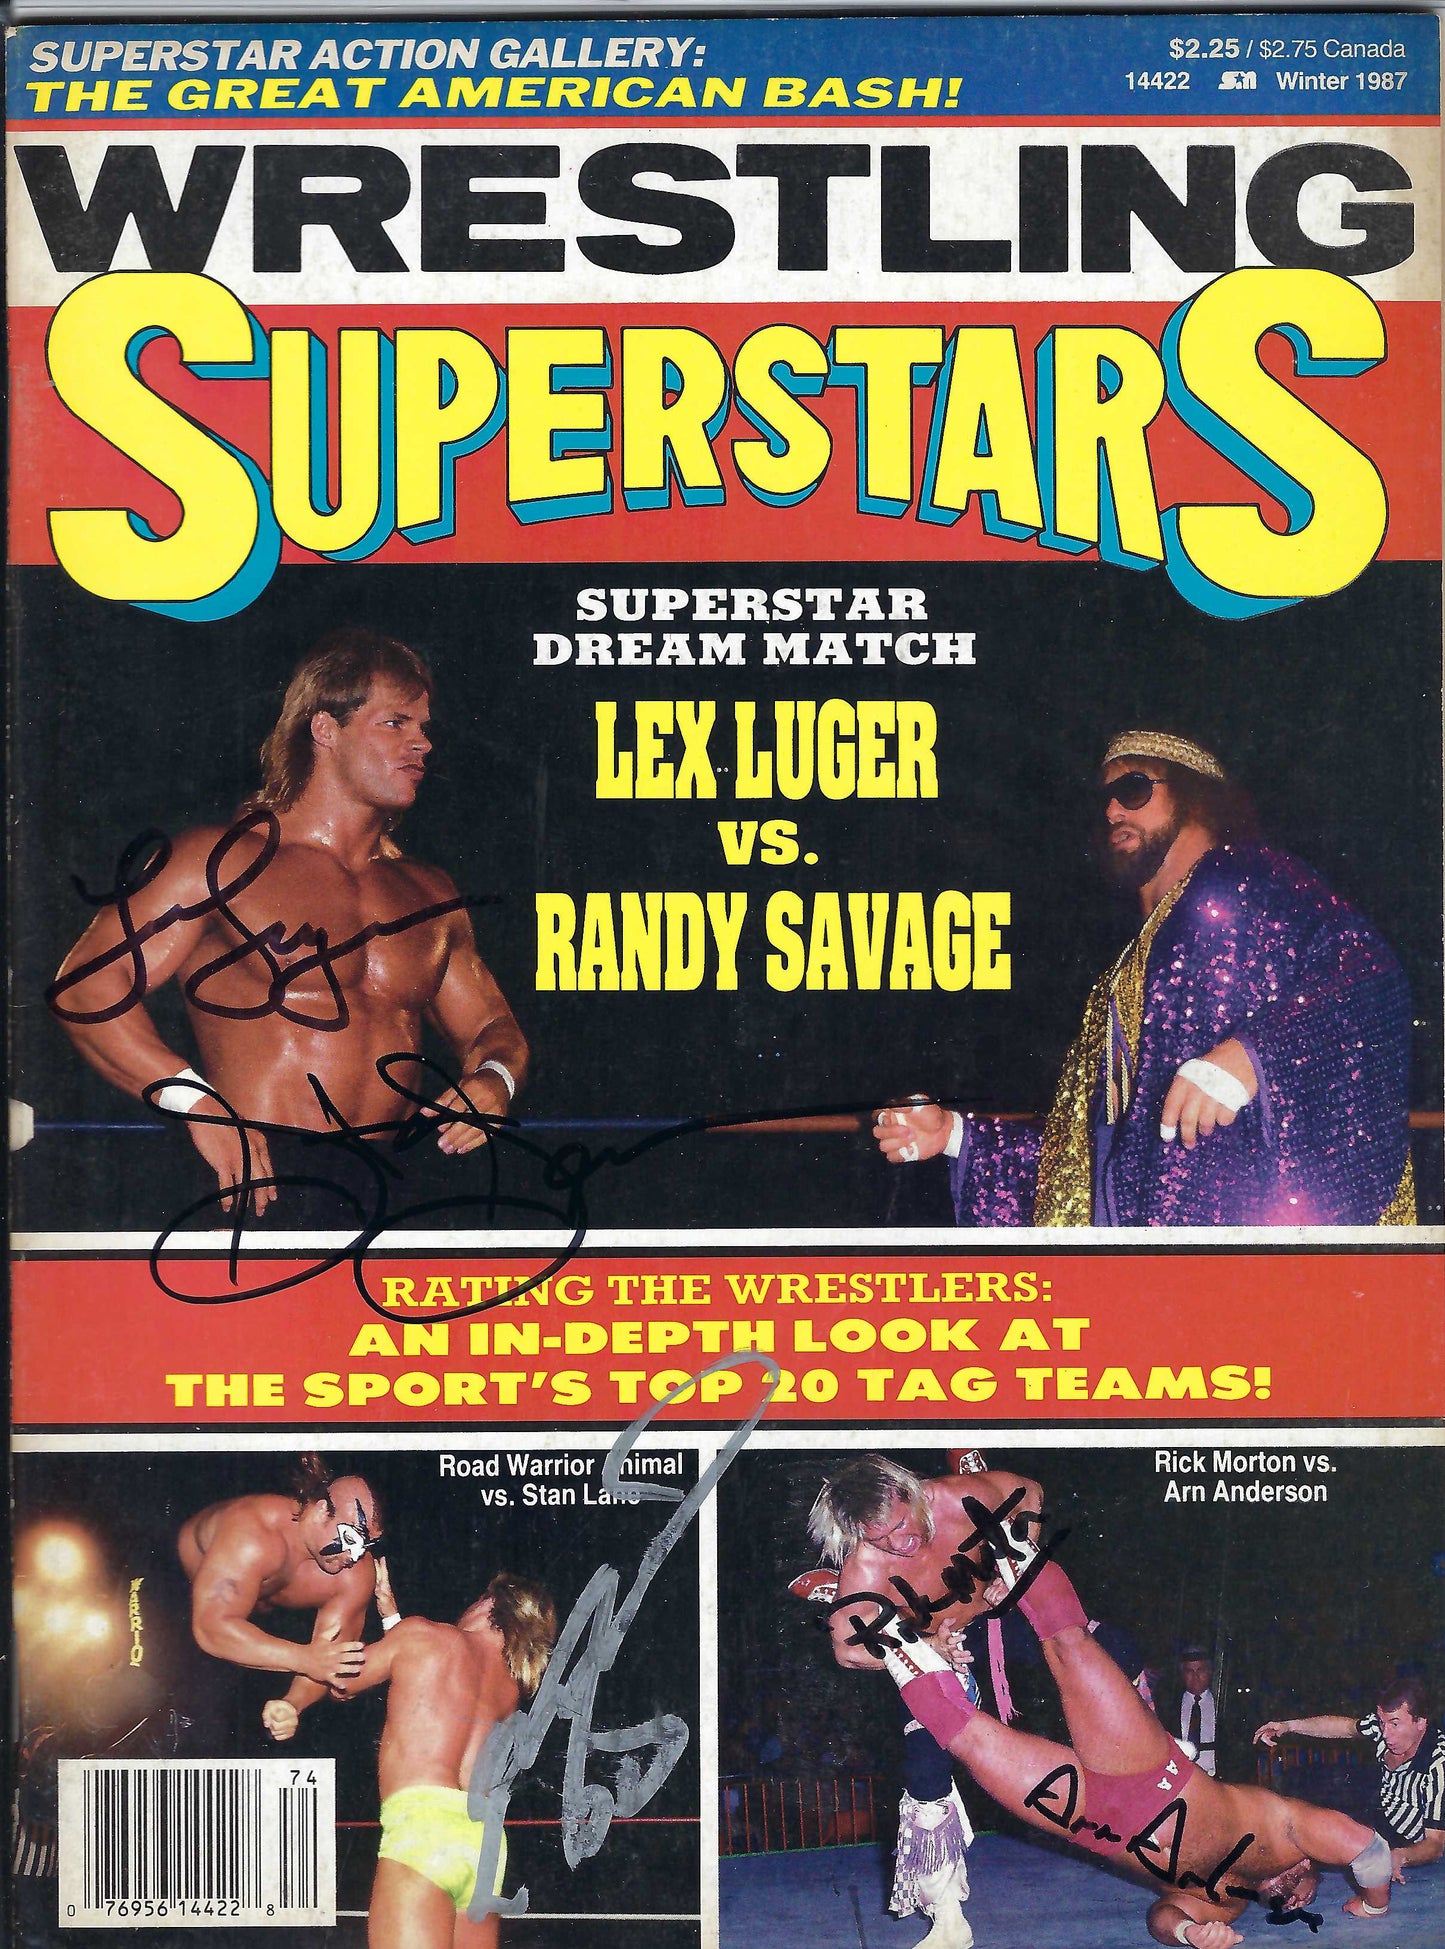 BD75  Lex Luger  Road Warrior Animal Ricky Morton  Arn Anderson  Autographed Vintage Wrestling Magazine Poster w/COA